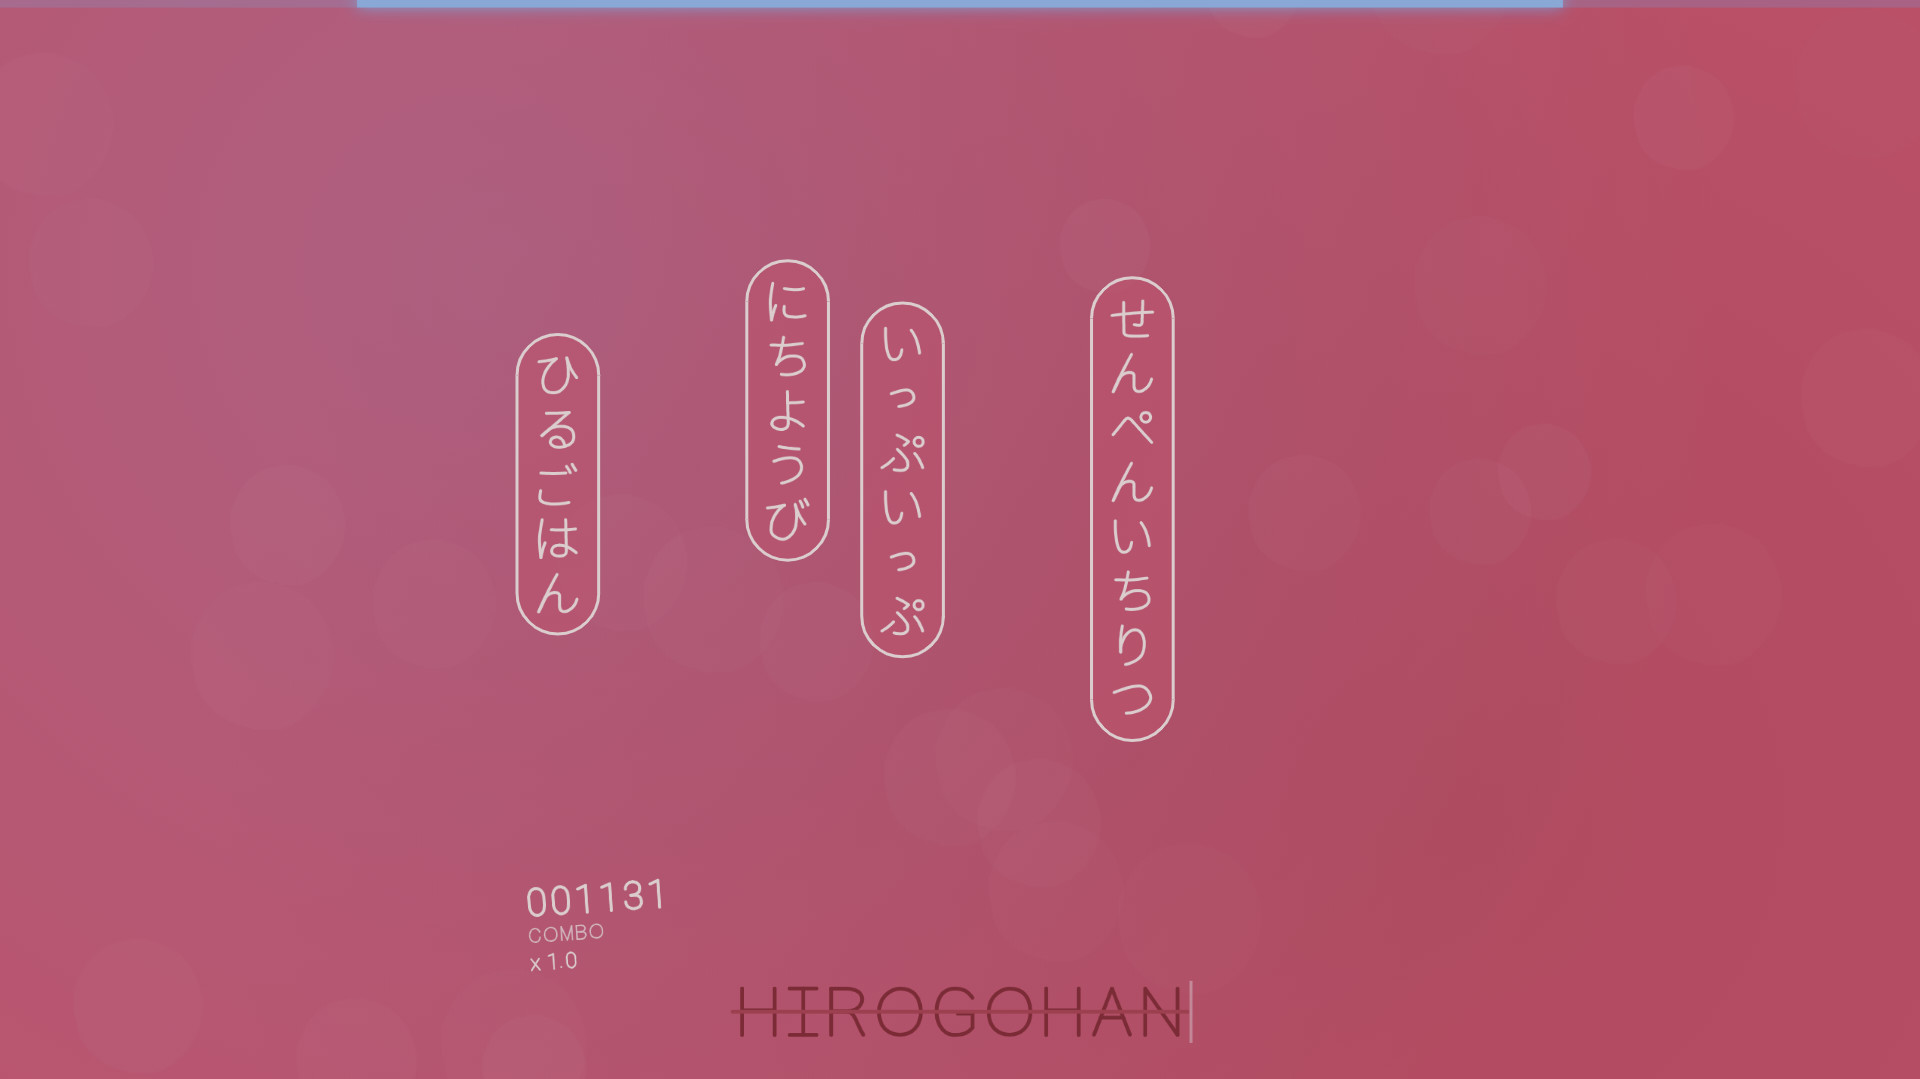 You Can Kana - Learn Japanese Hiragana & Katakana EN Language Only Steam CD Key